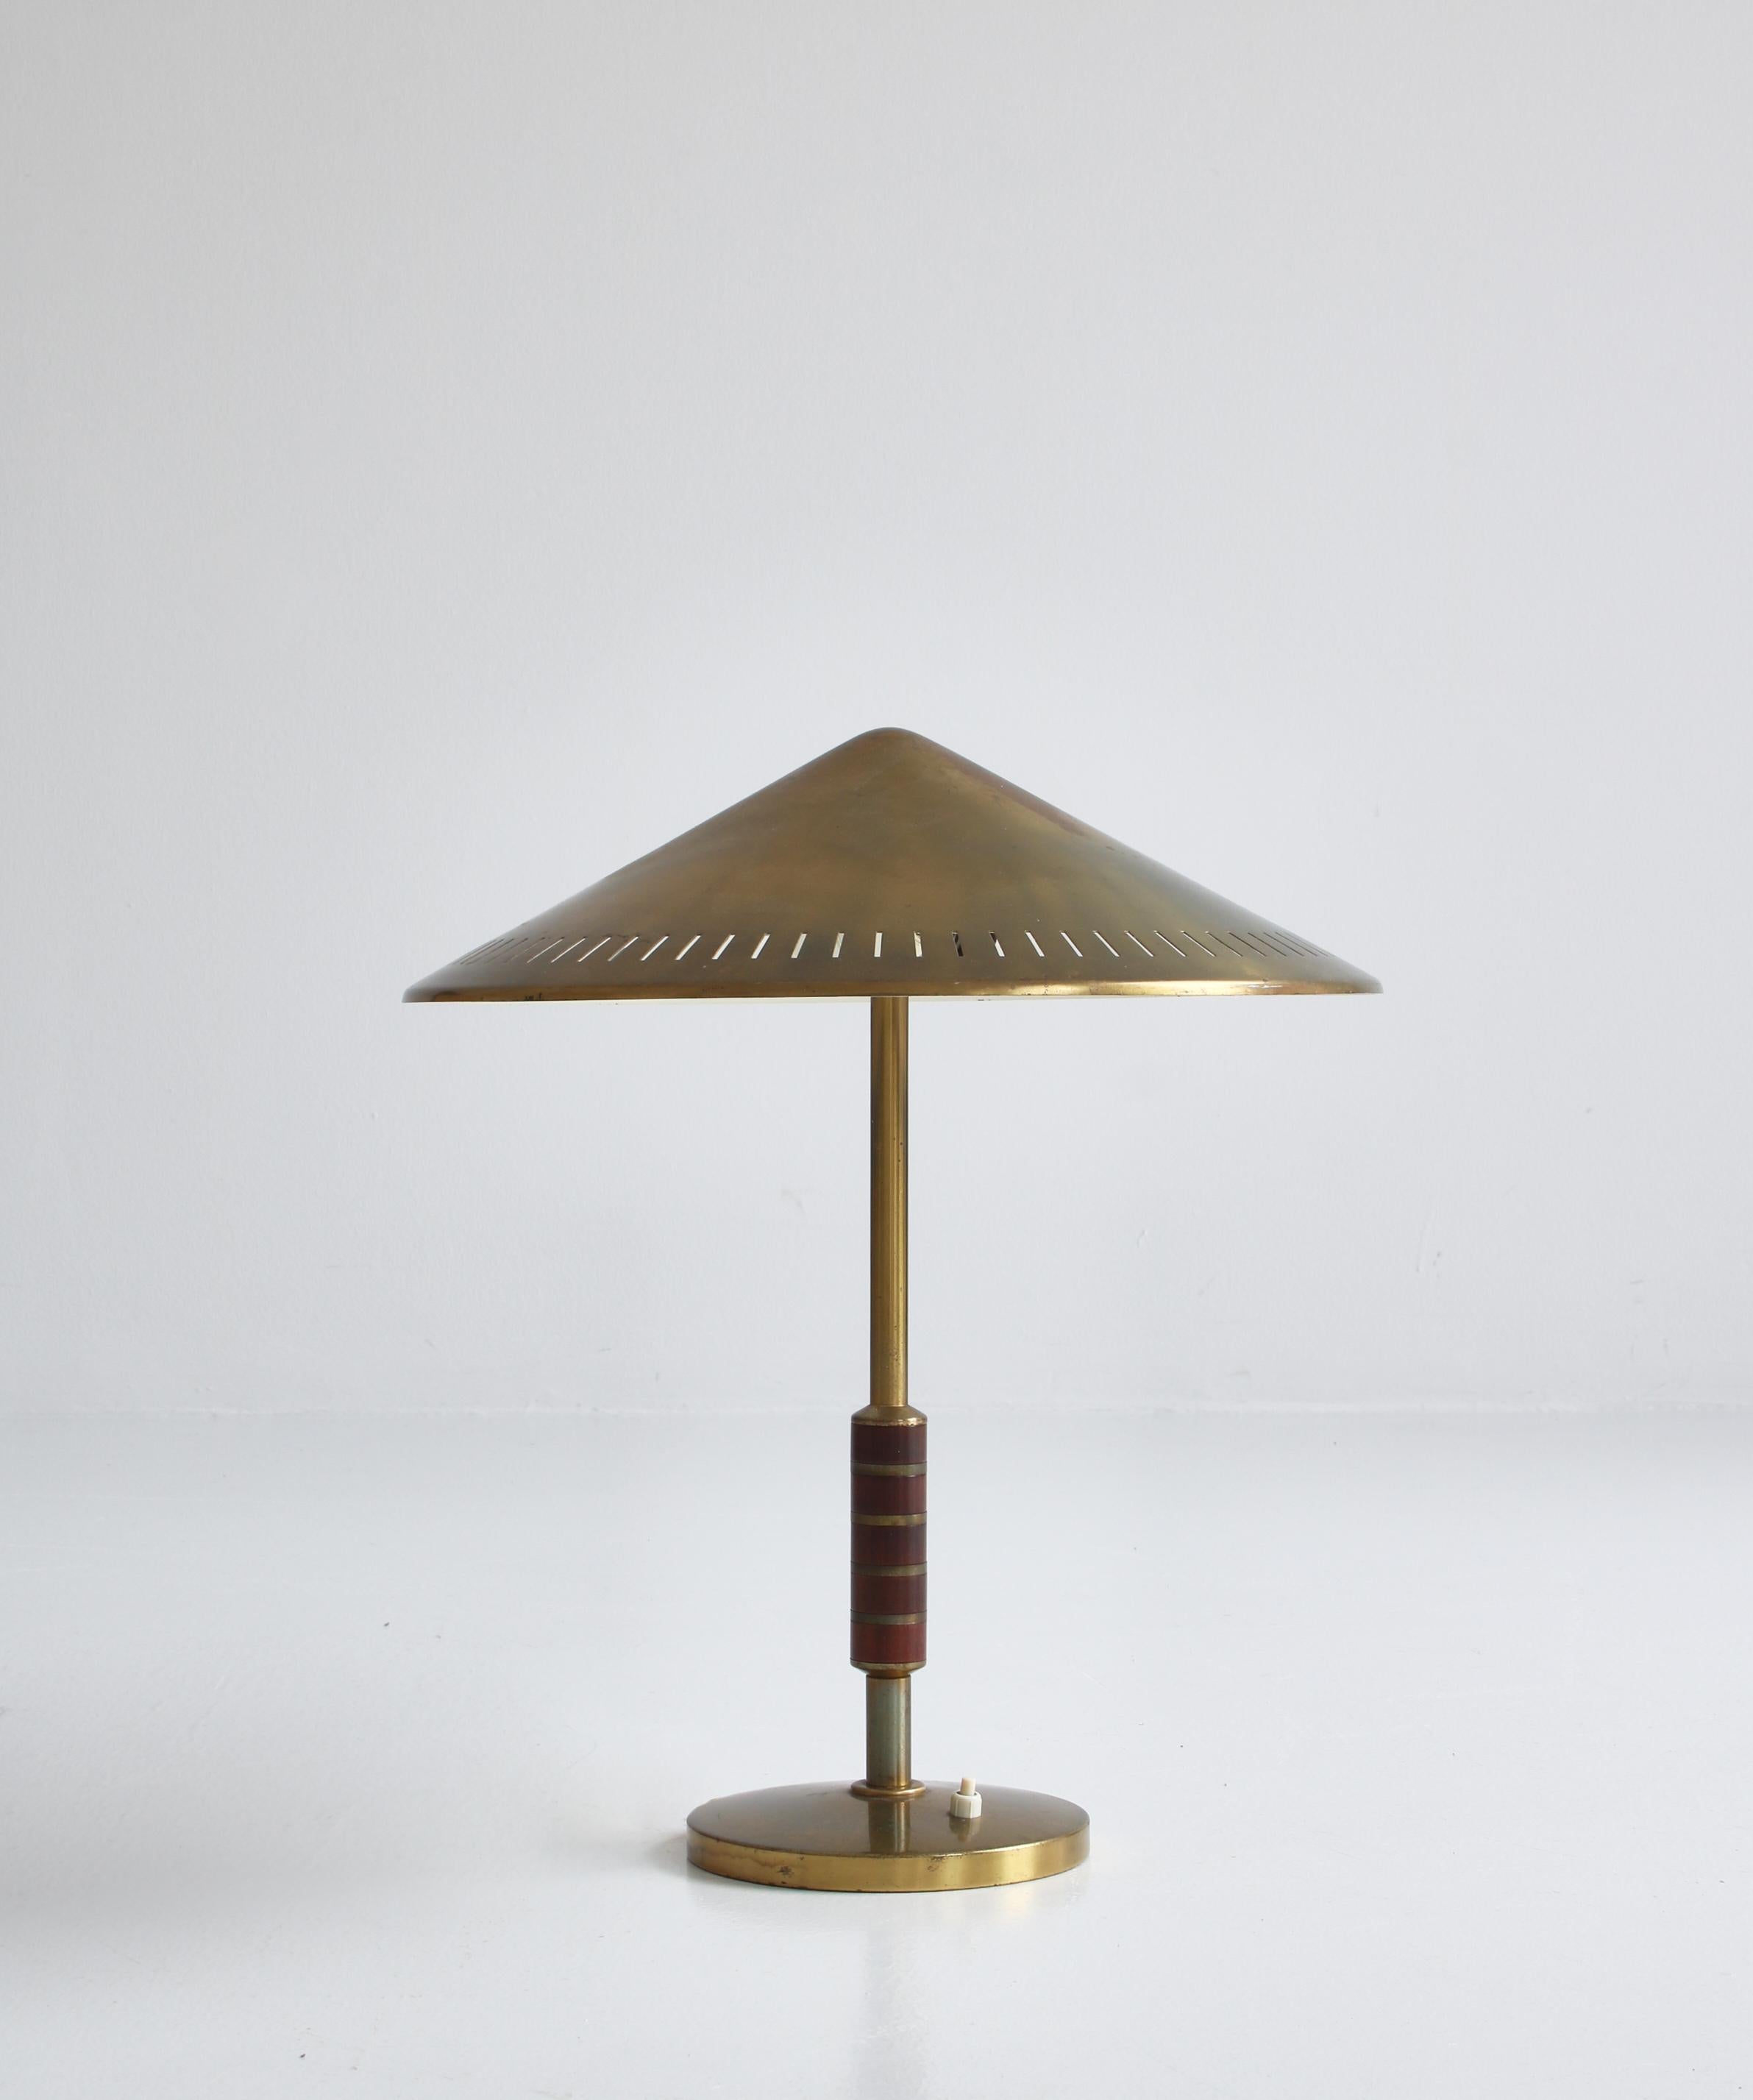 Scandinavian Modern Danish Modern Brass & Mahogany Table Lamp by Bent Karlby for LYFA, 1956 For Sale